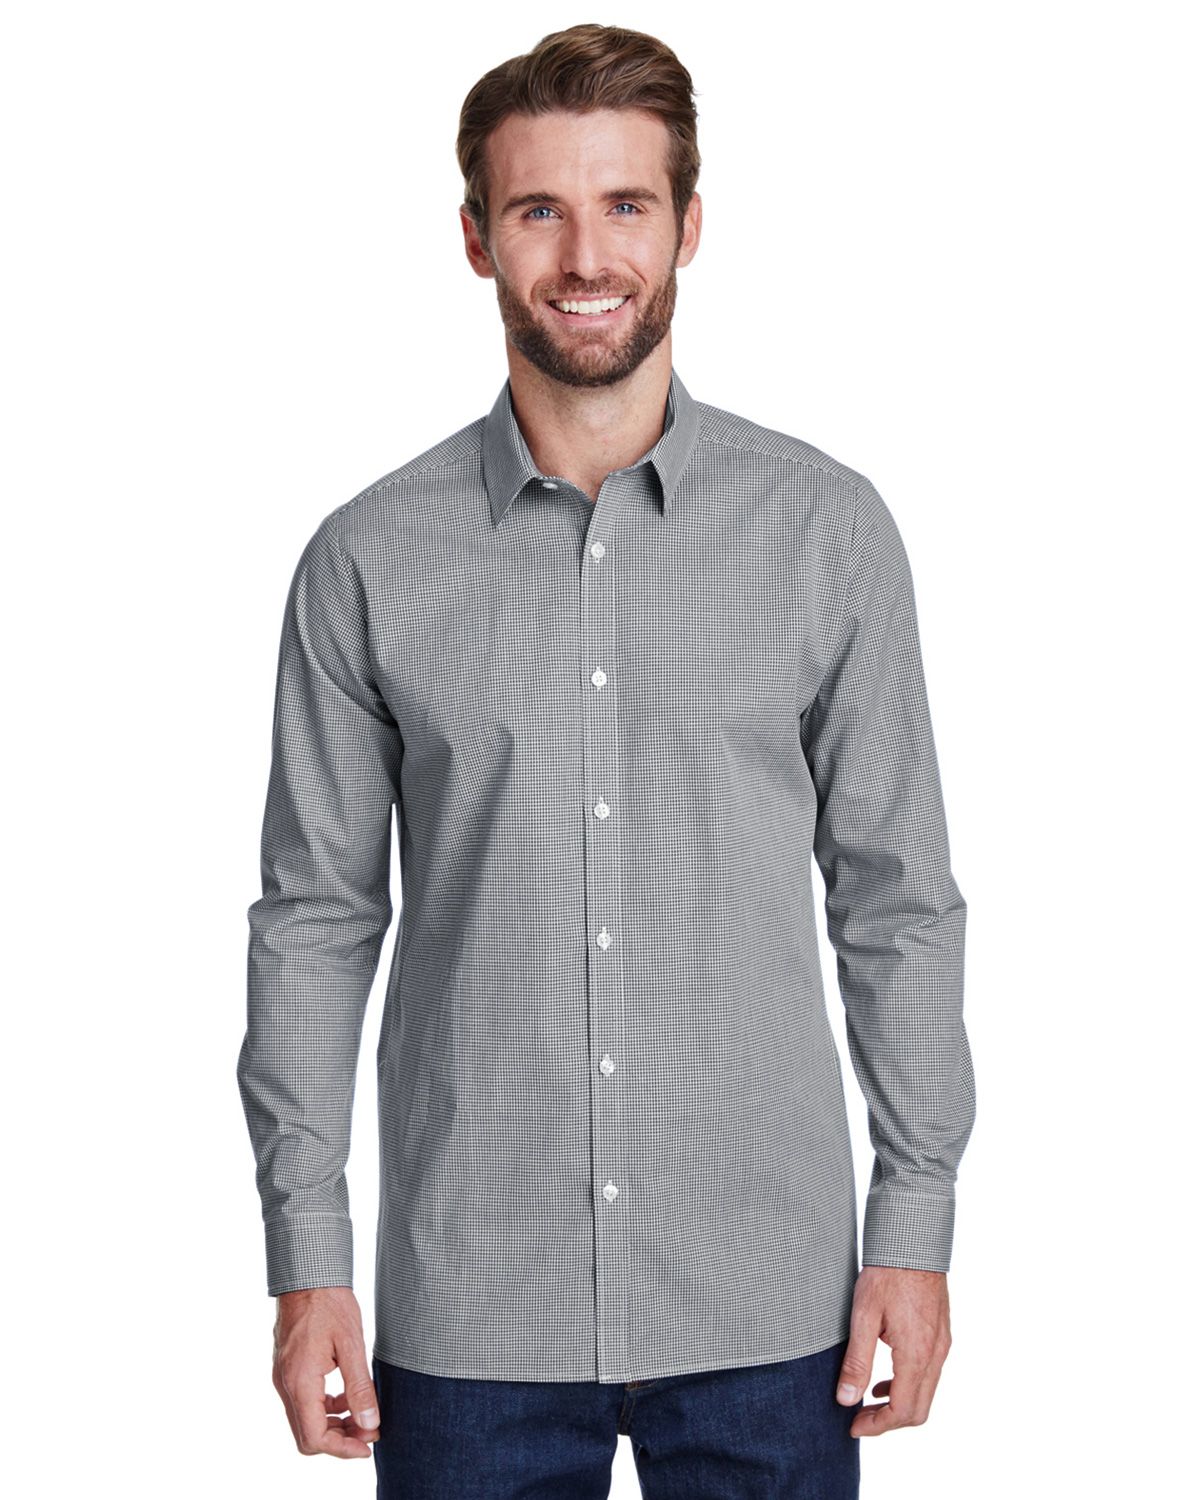 Artisan Collection RP220 Men's Microcheck Gingham Long-Sleeve Cotton Shirt